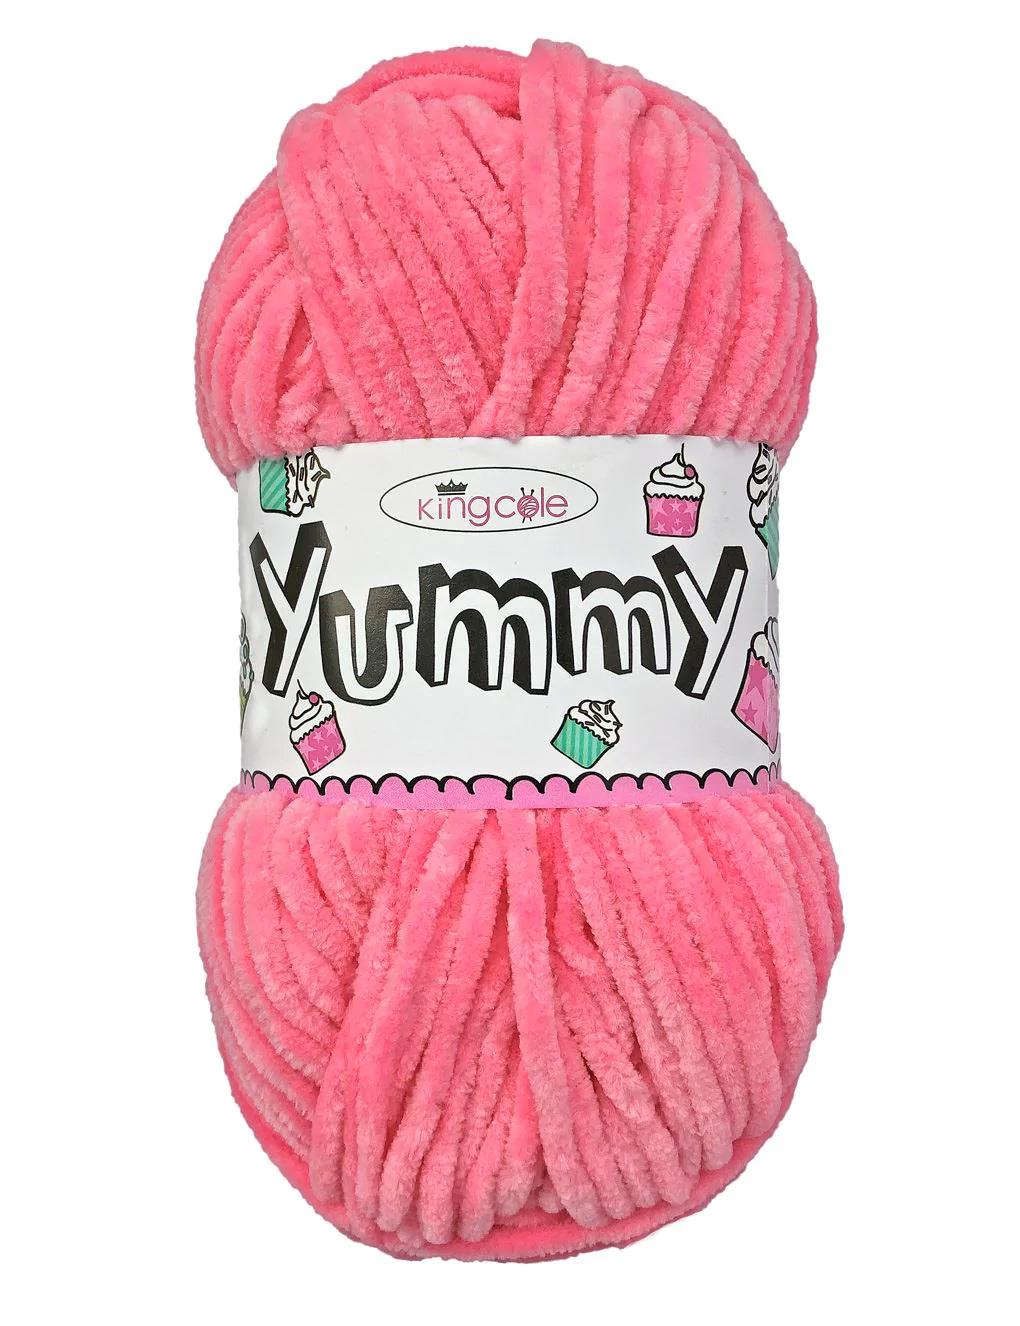 King Cole Yummy Disco Pink (4740) chenille yarn - 100g